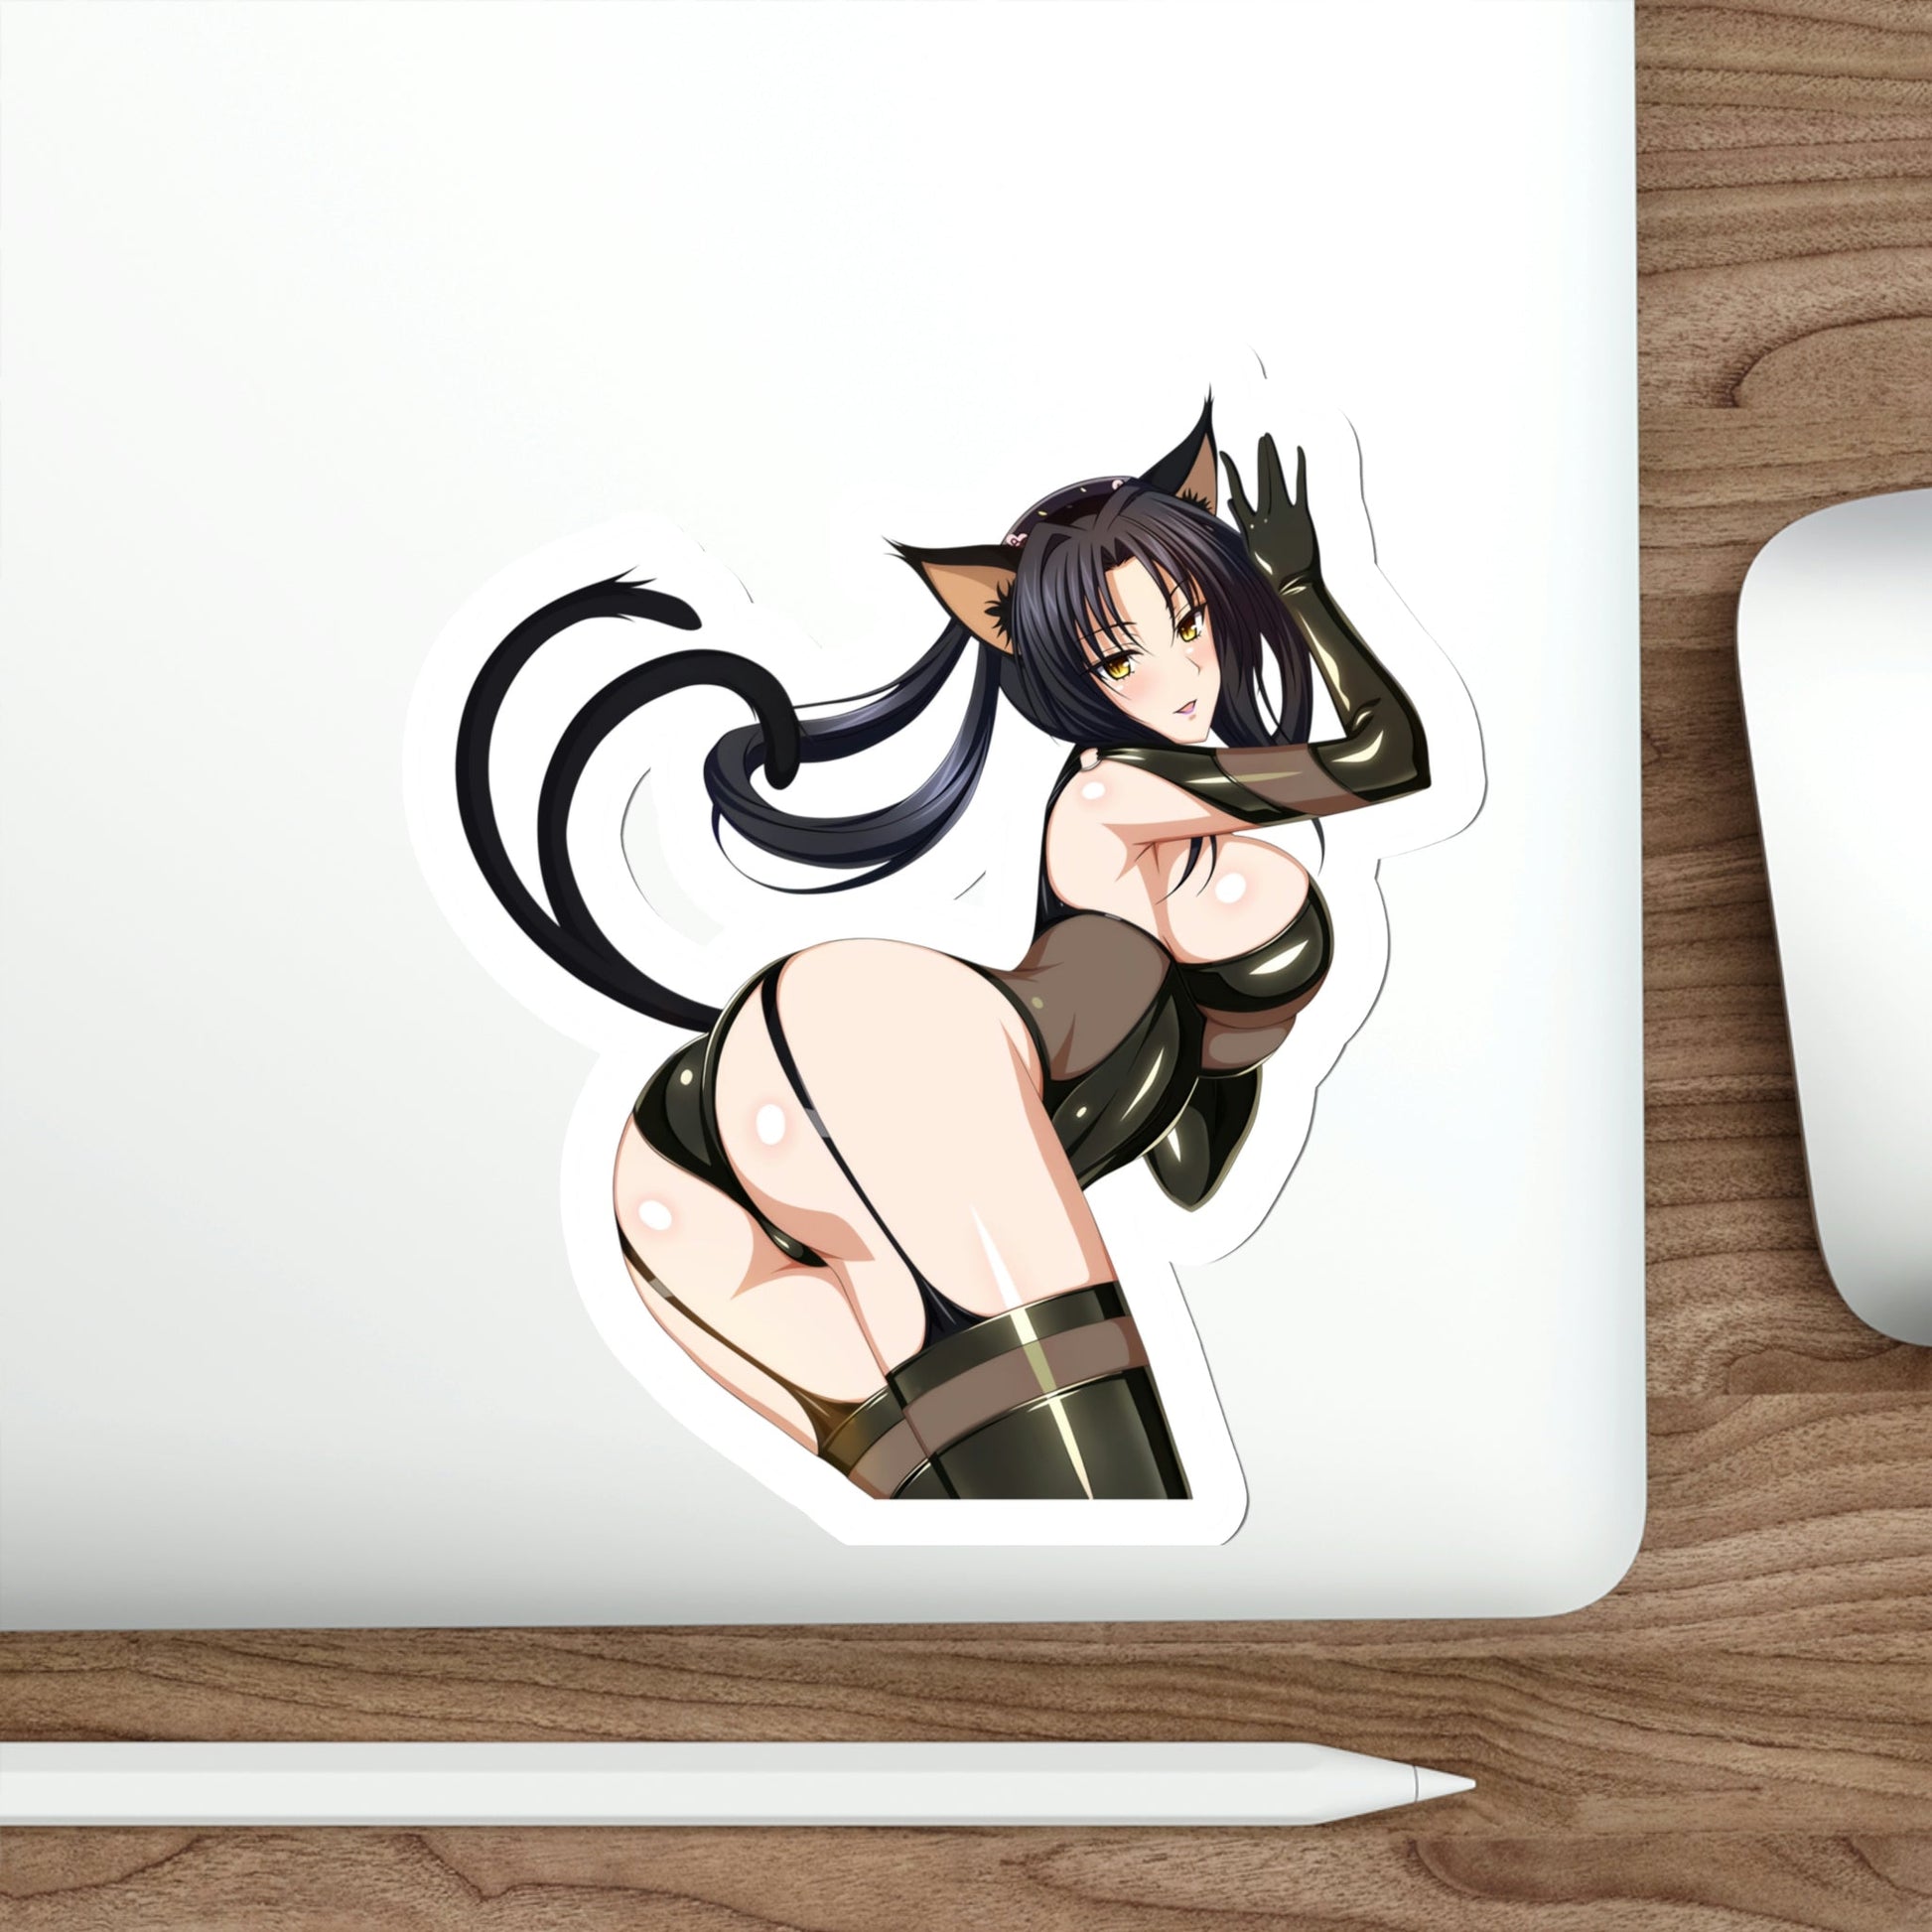 Anime Cat Girl Sticker, nsfw sticker, waterproof anime girl sticker, ecchi  sticker, neko, neko girl